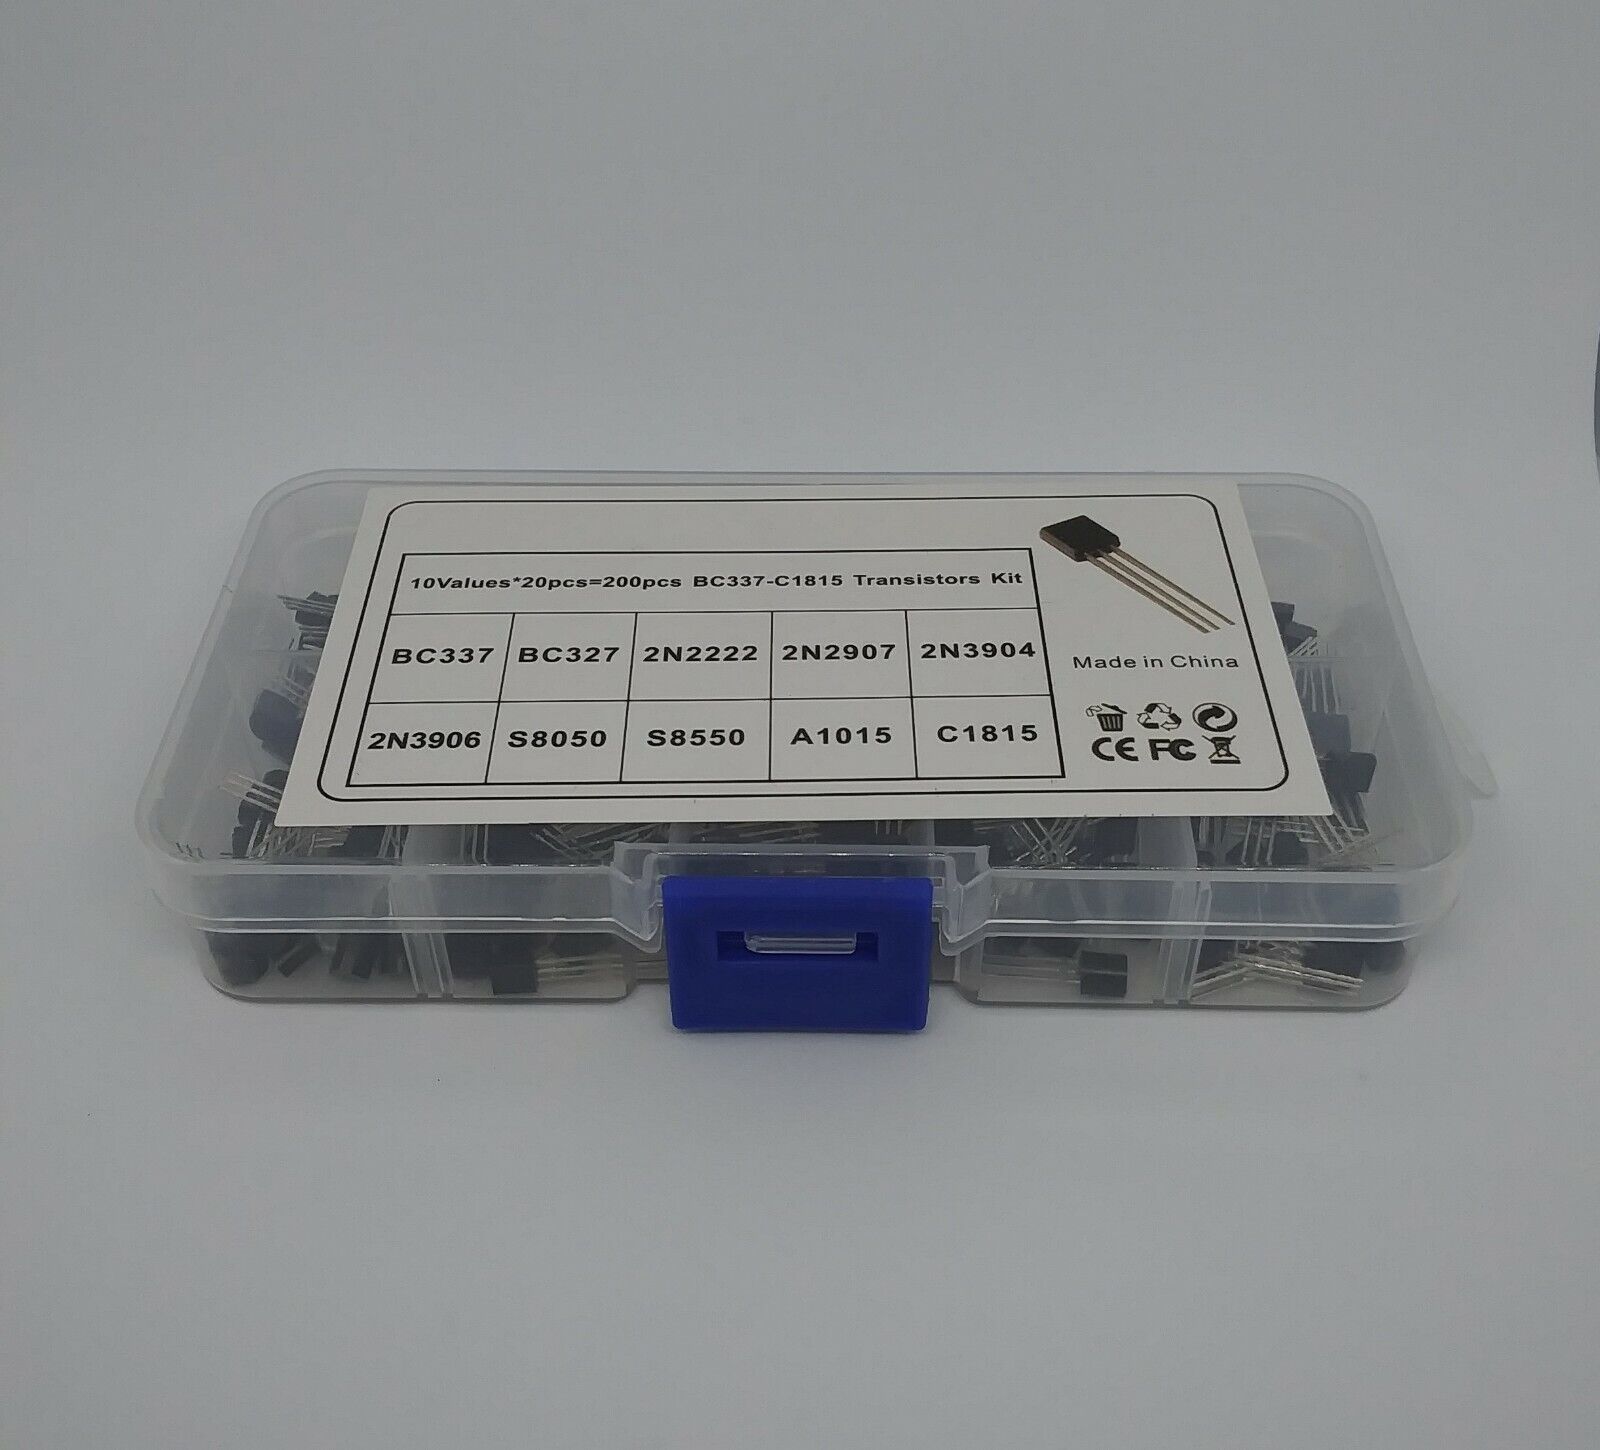 200pcs Box Bipolar Junction Transistor BJT NPN PNP Assortment Kit 10 value Pack